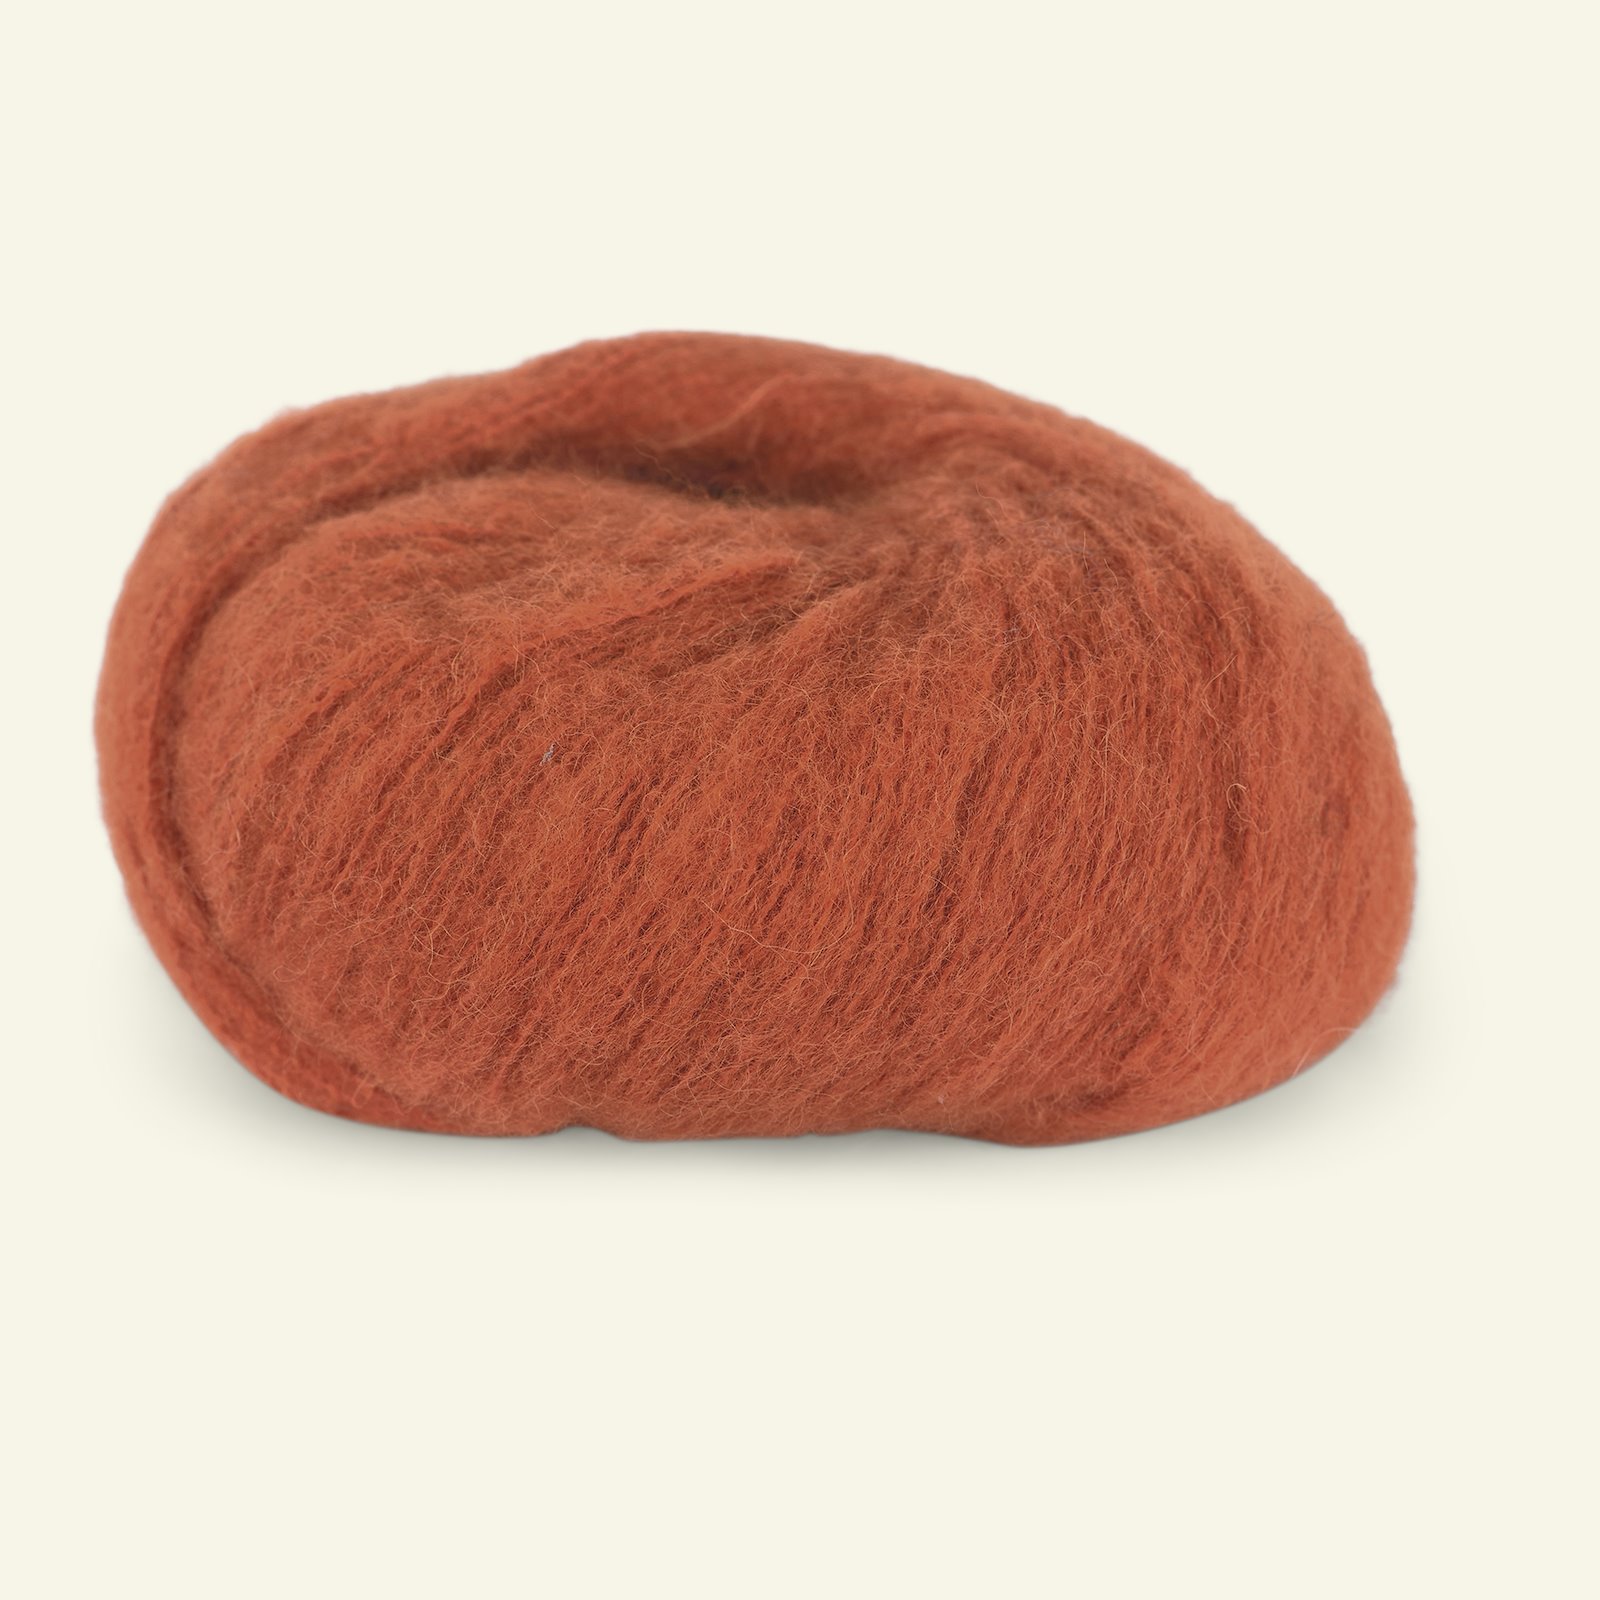 Du Store Alpakka, airy alpaca yarn "Faerytale", burned orange (783) 90000599_pack_b